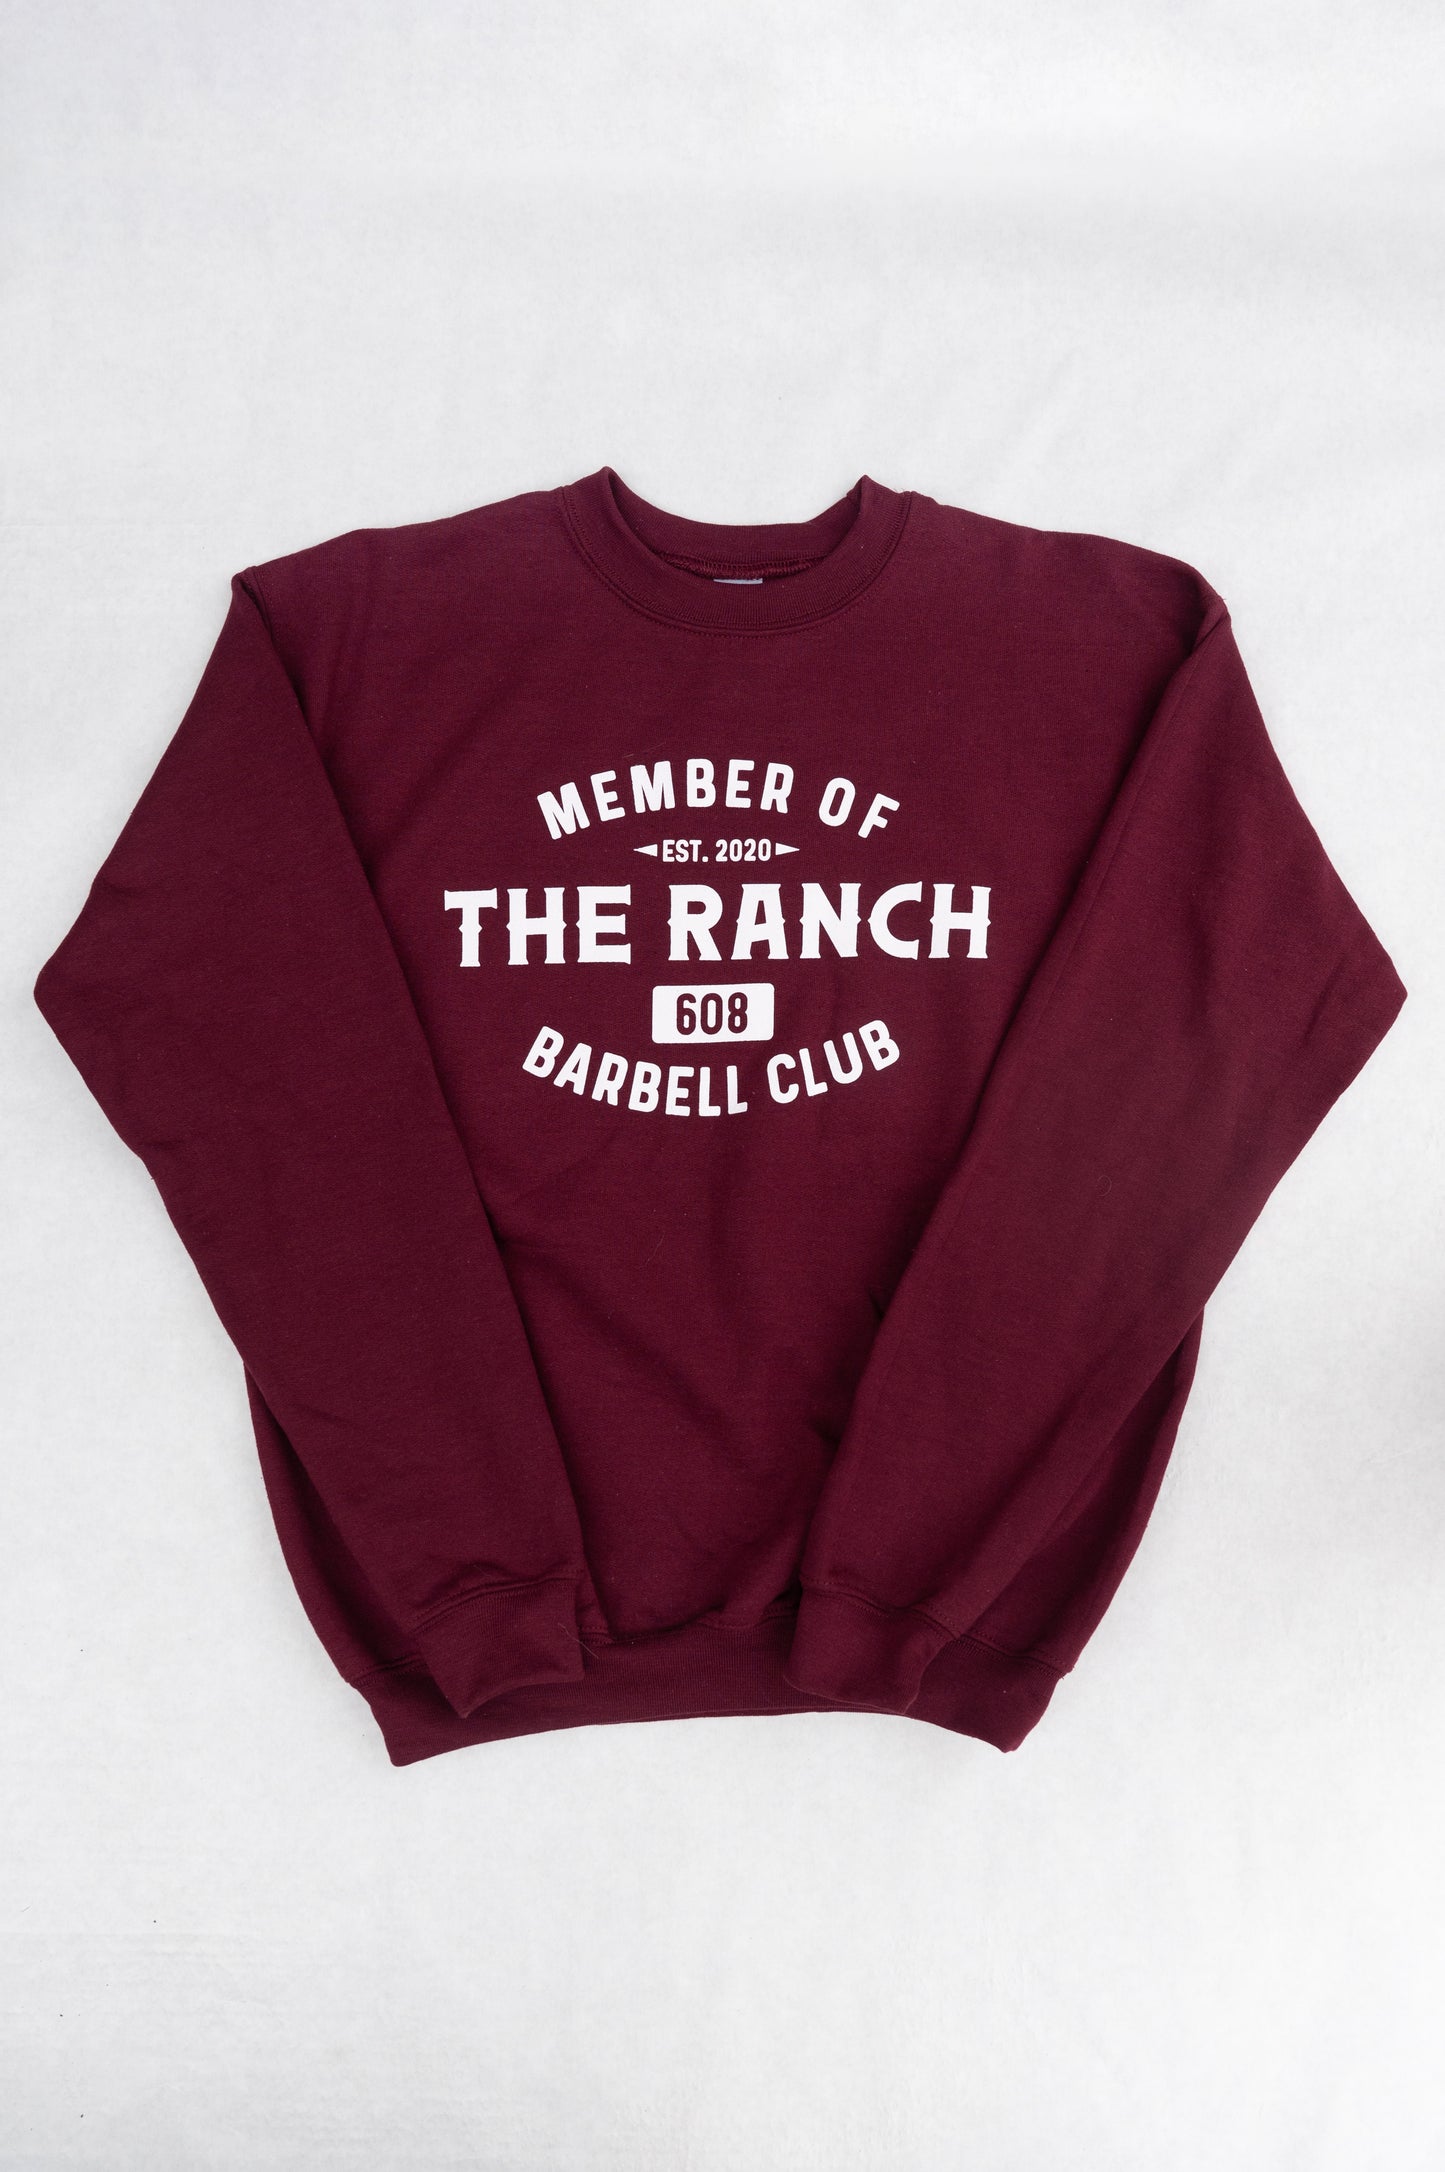 The Ranch Barbell Club Crewneck